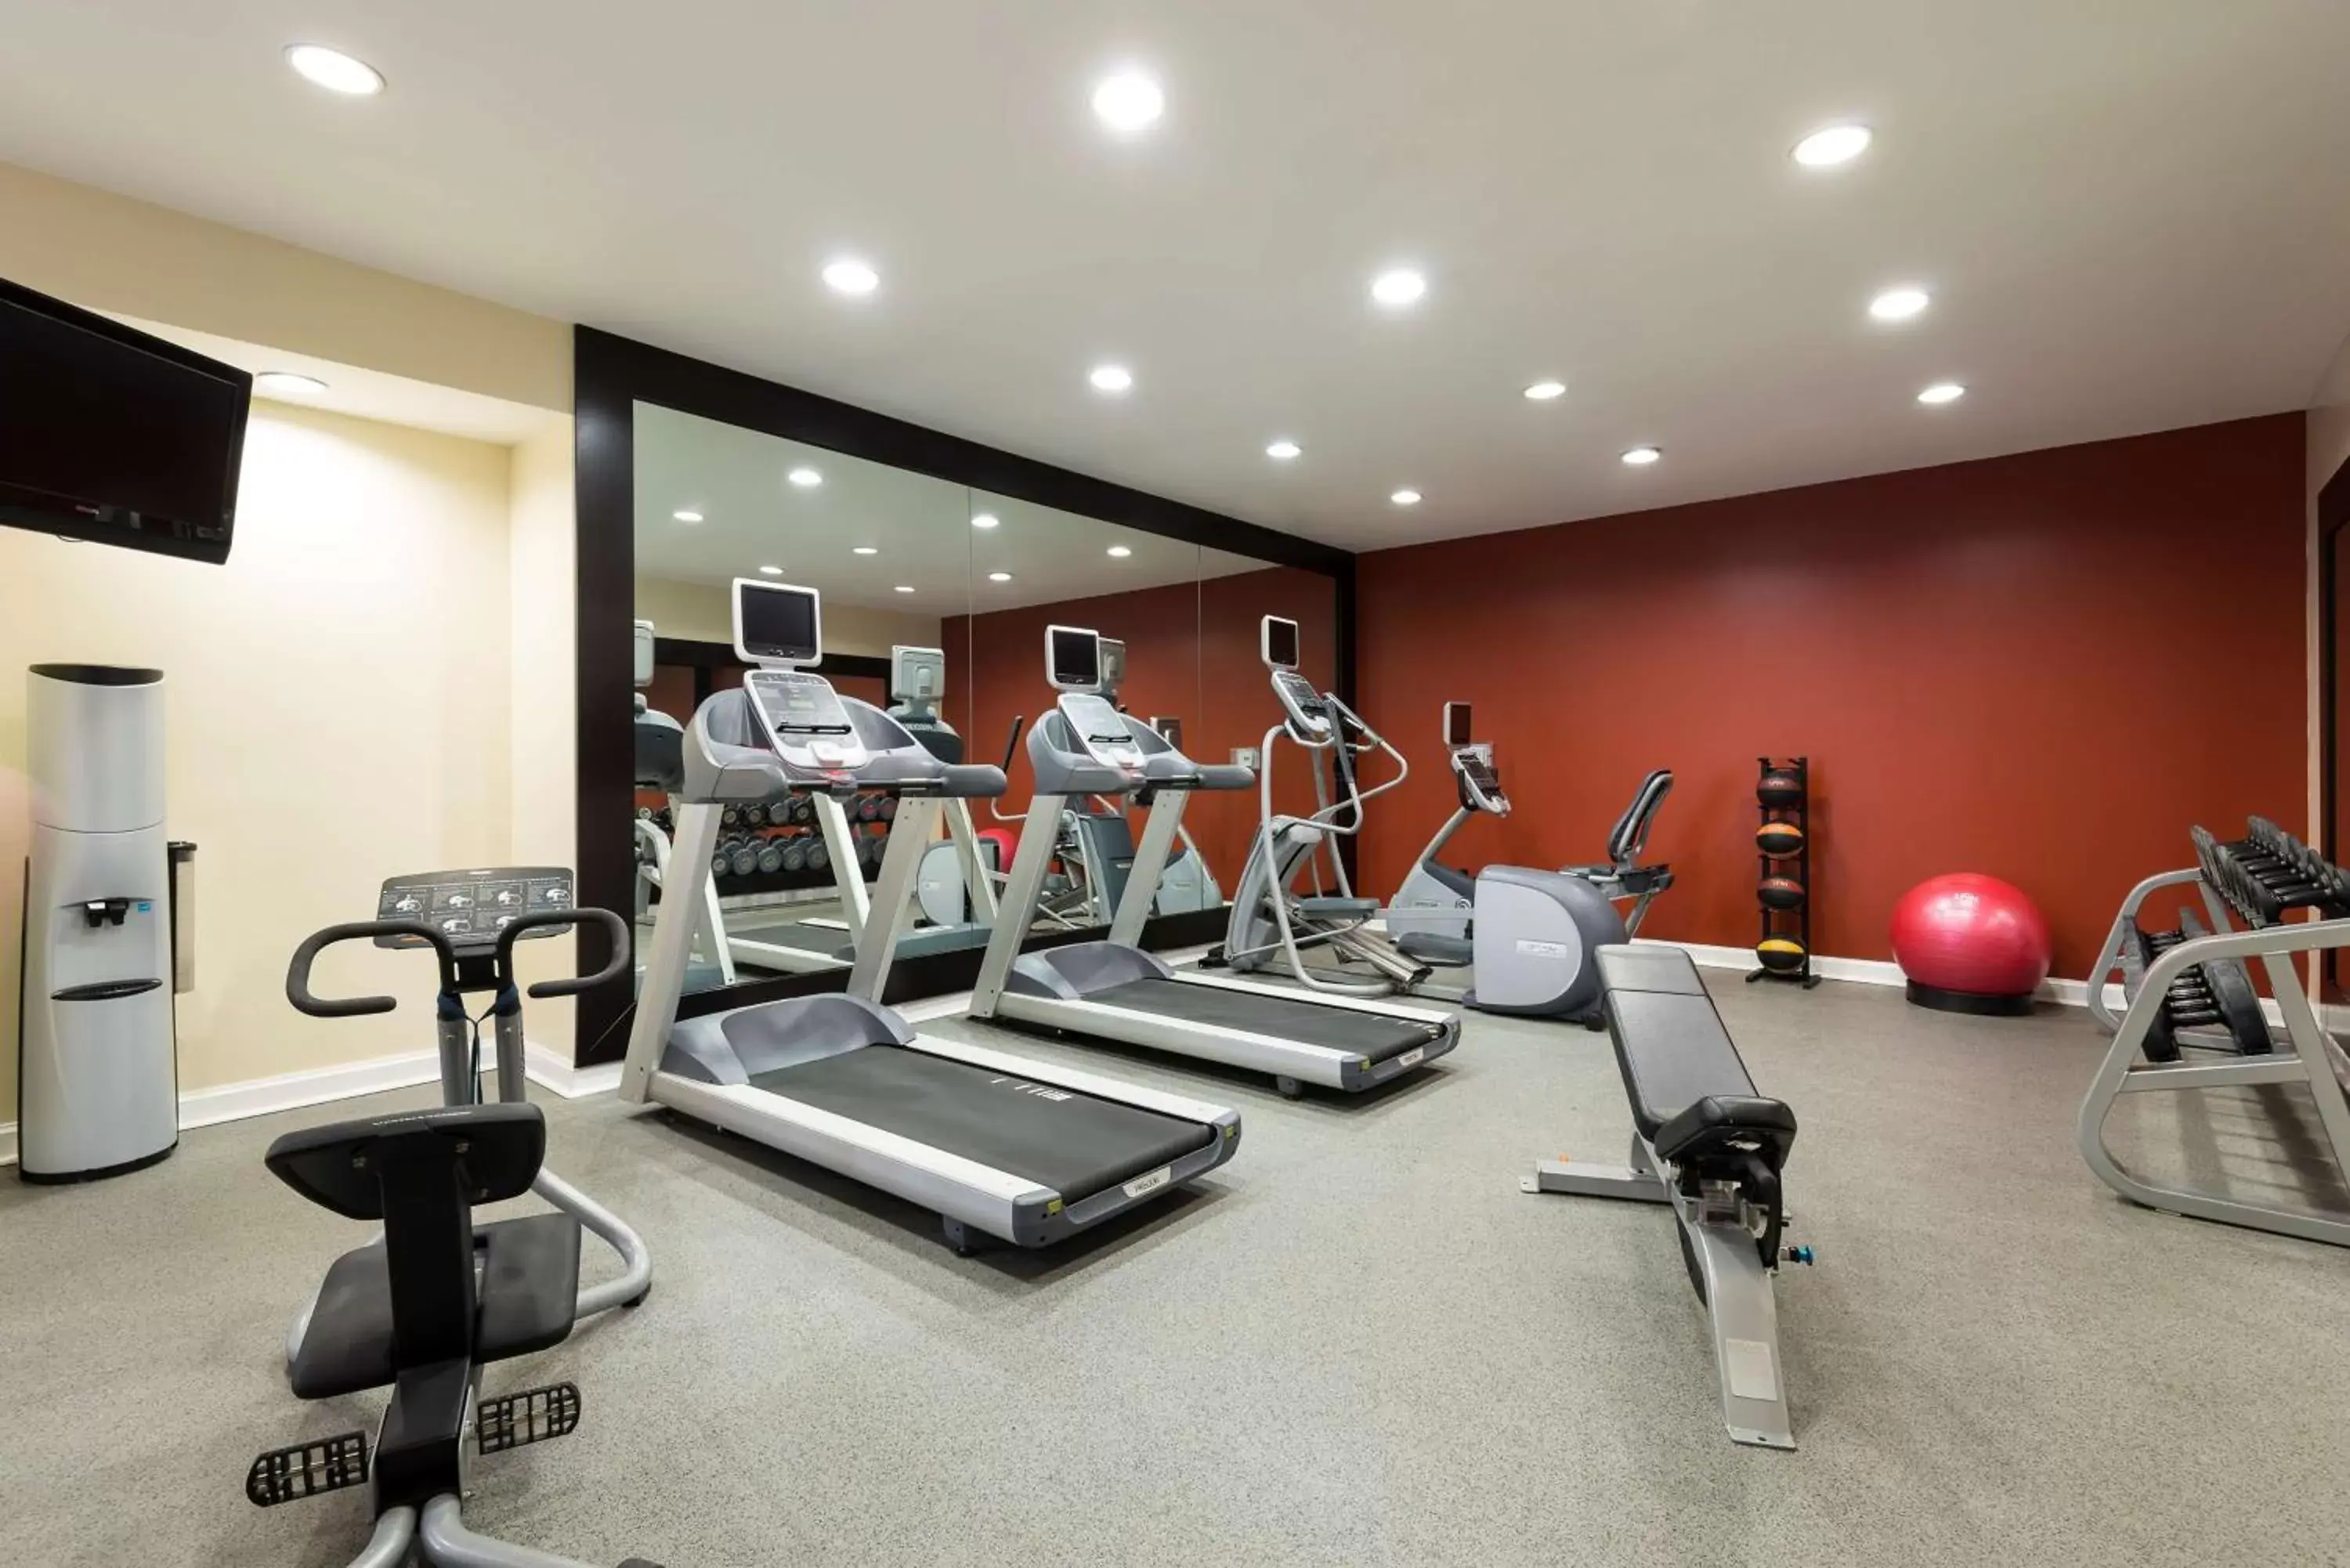 Fitness centre/facilities, Fitness Center/Facilities in Hilton Garden Inn Washington DC/Greenbelt